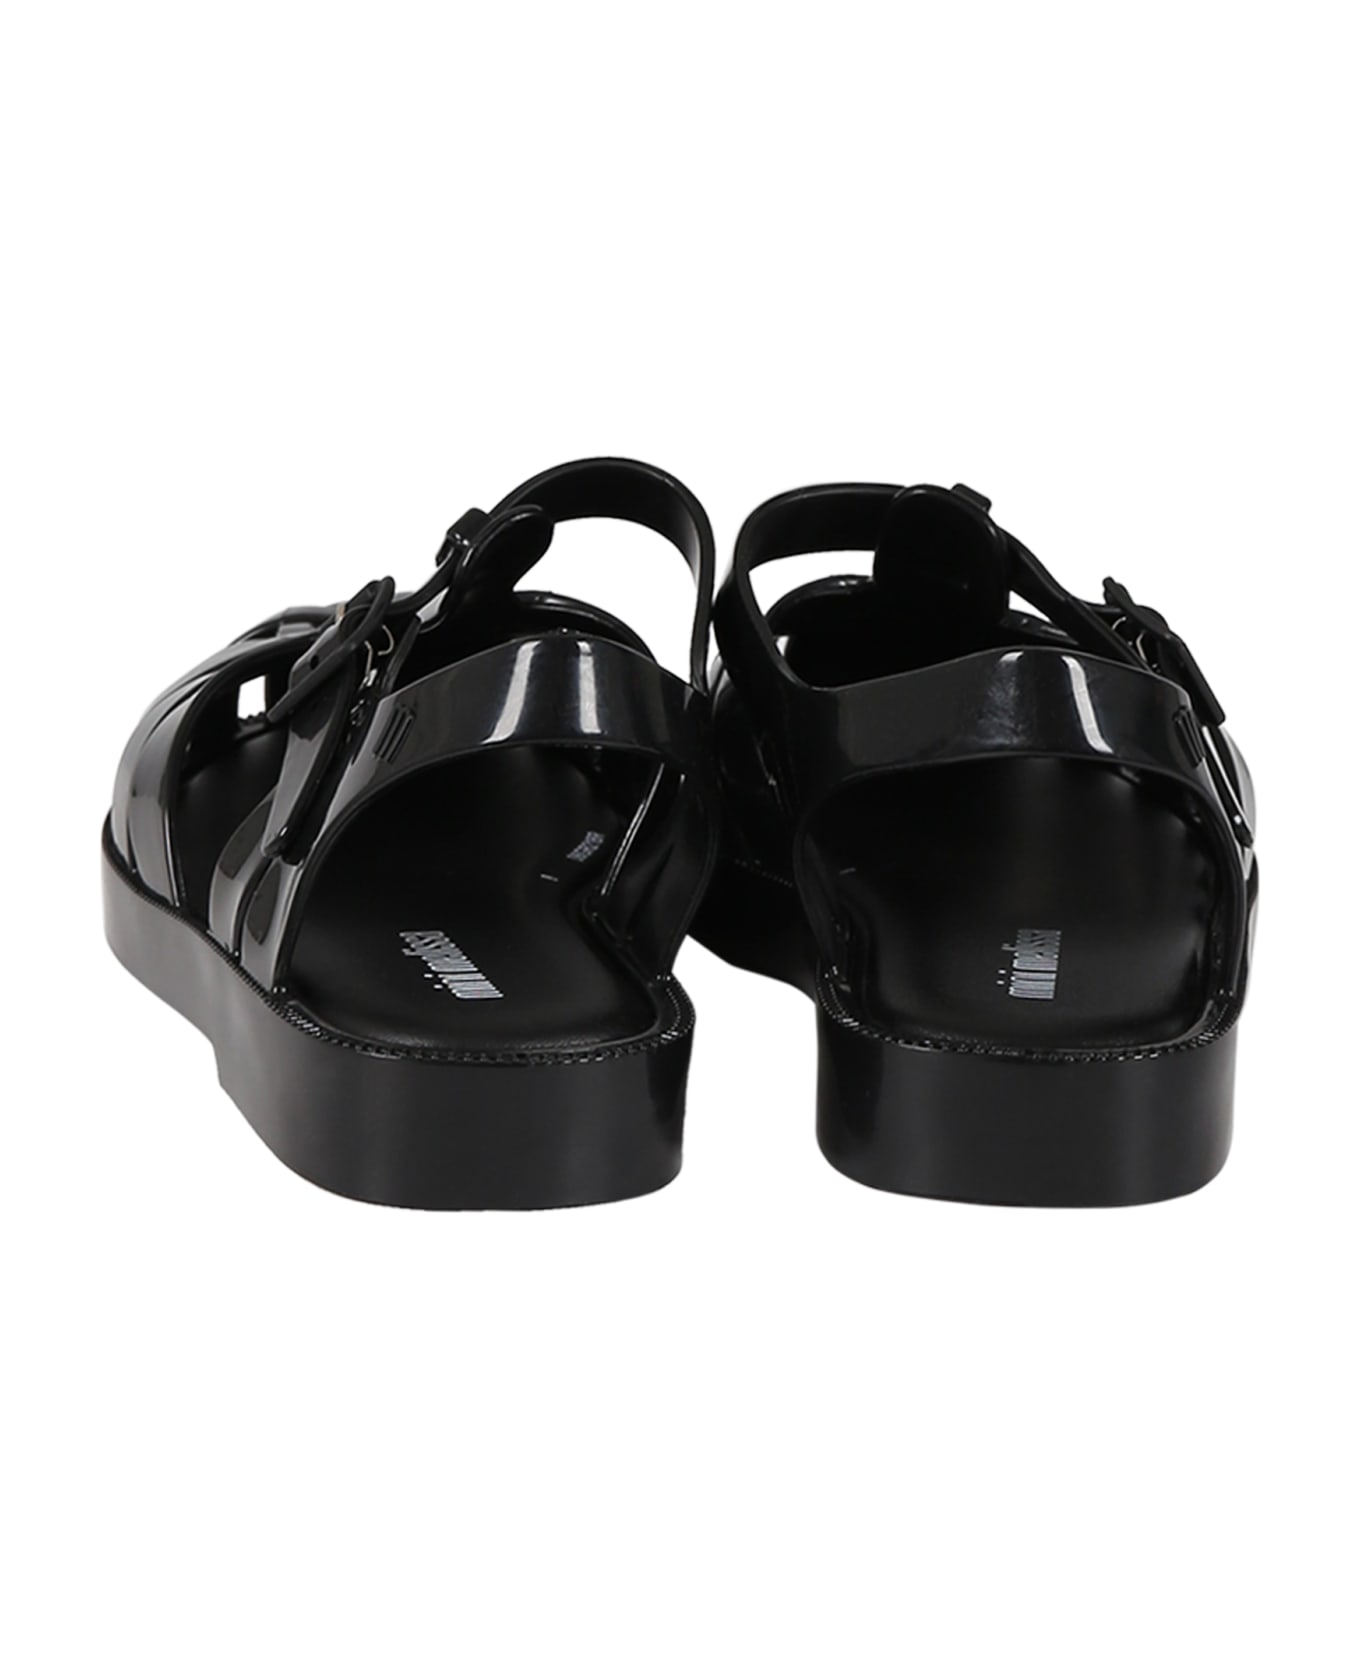 Melissa Black Sandals For Girl With Logo - Black